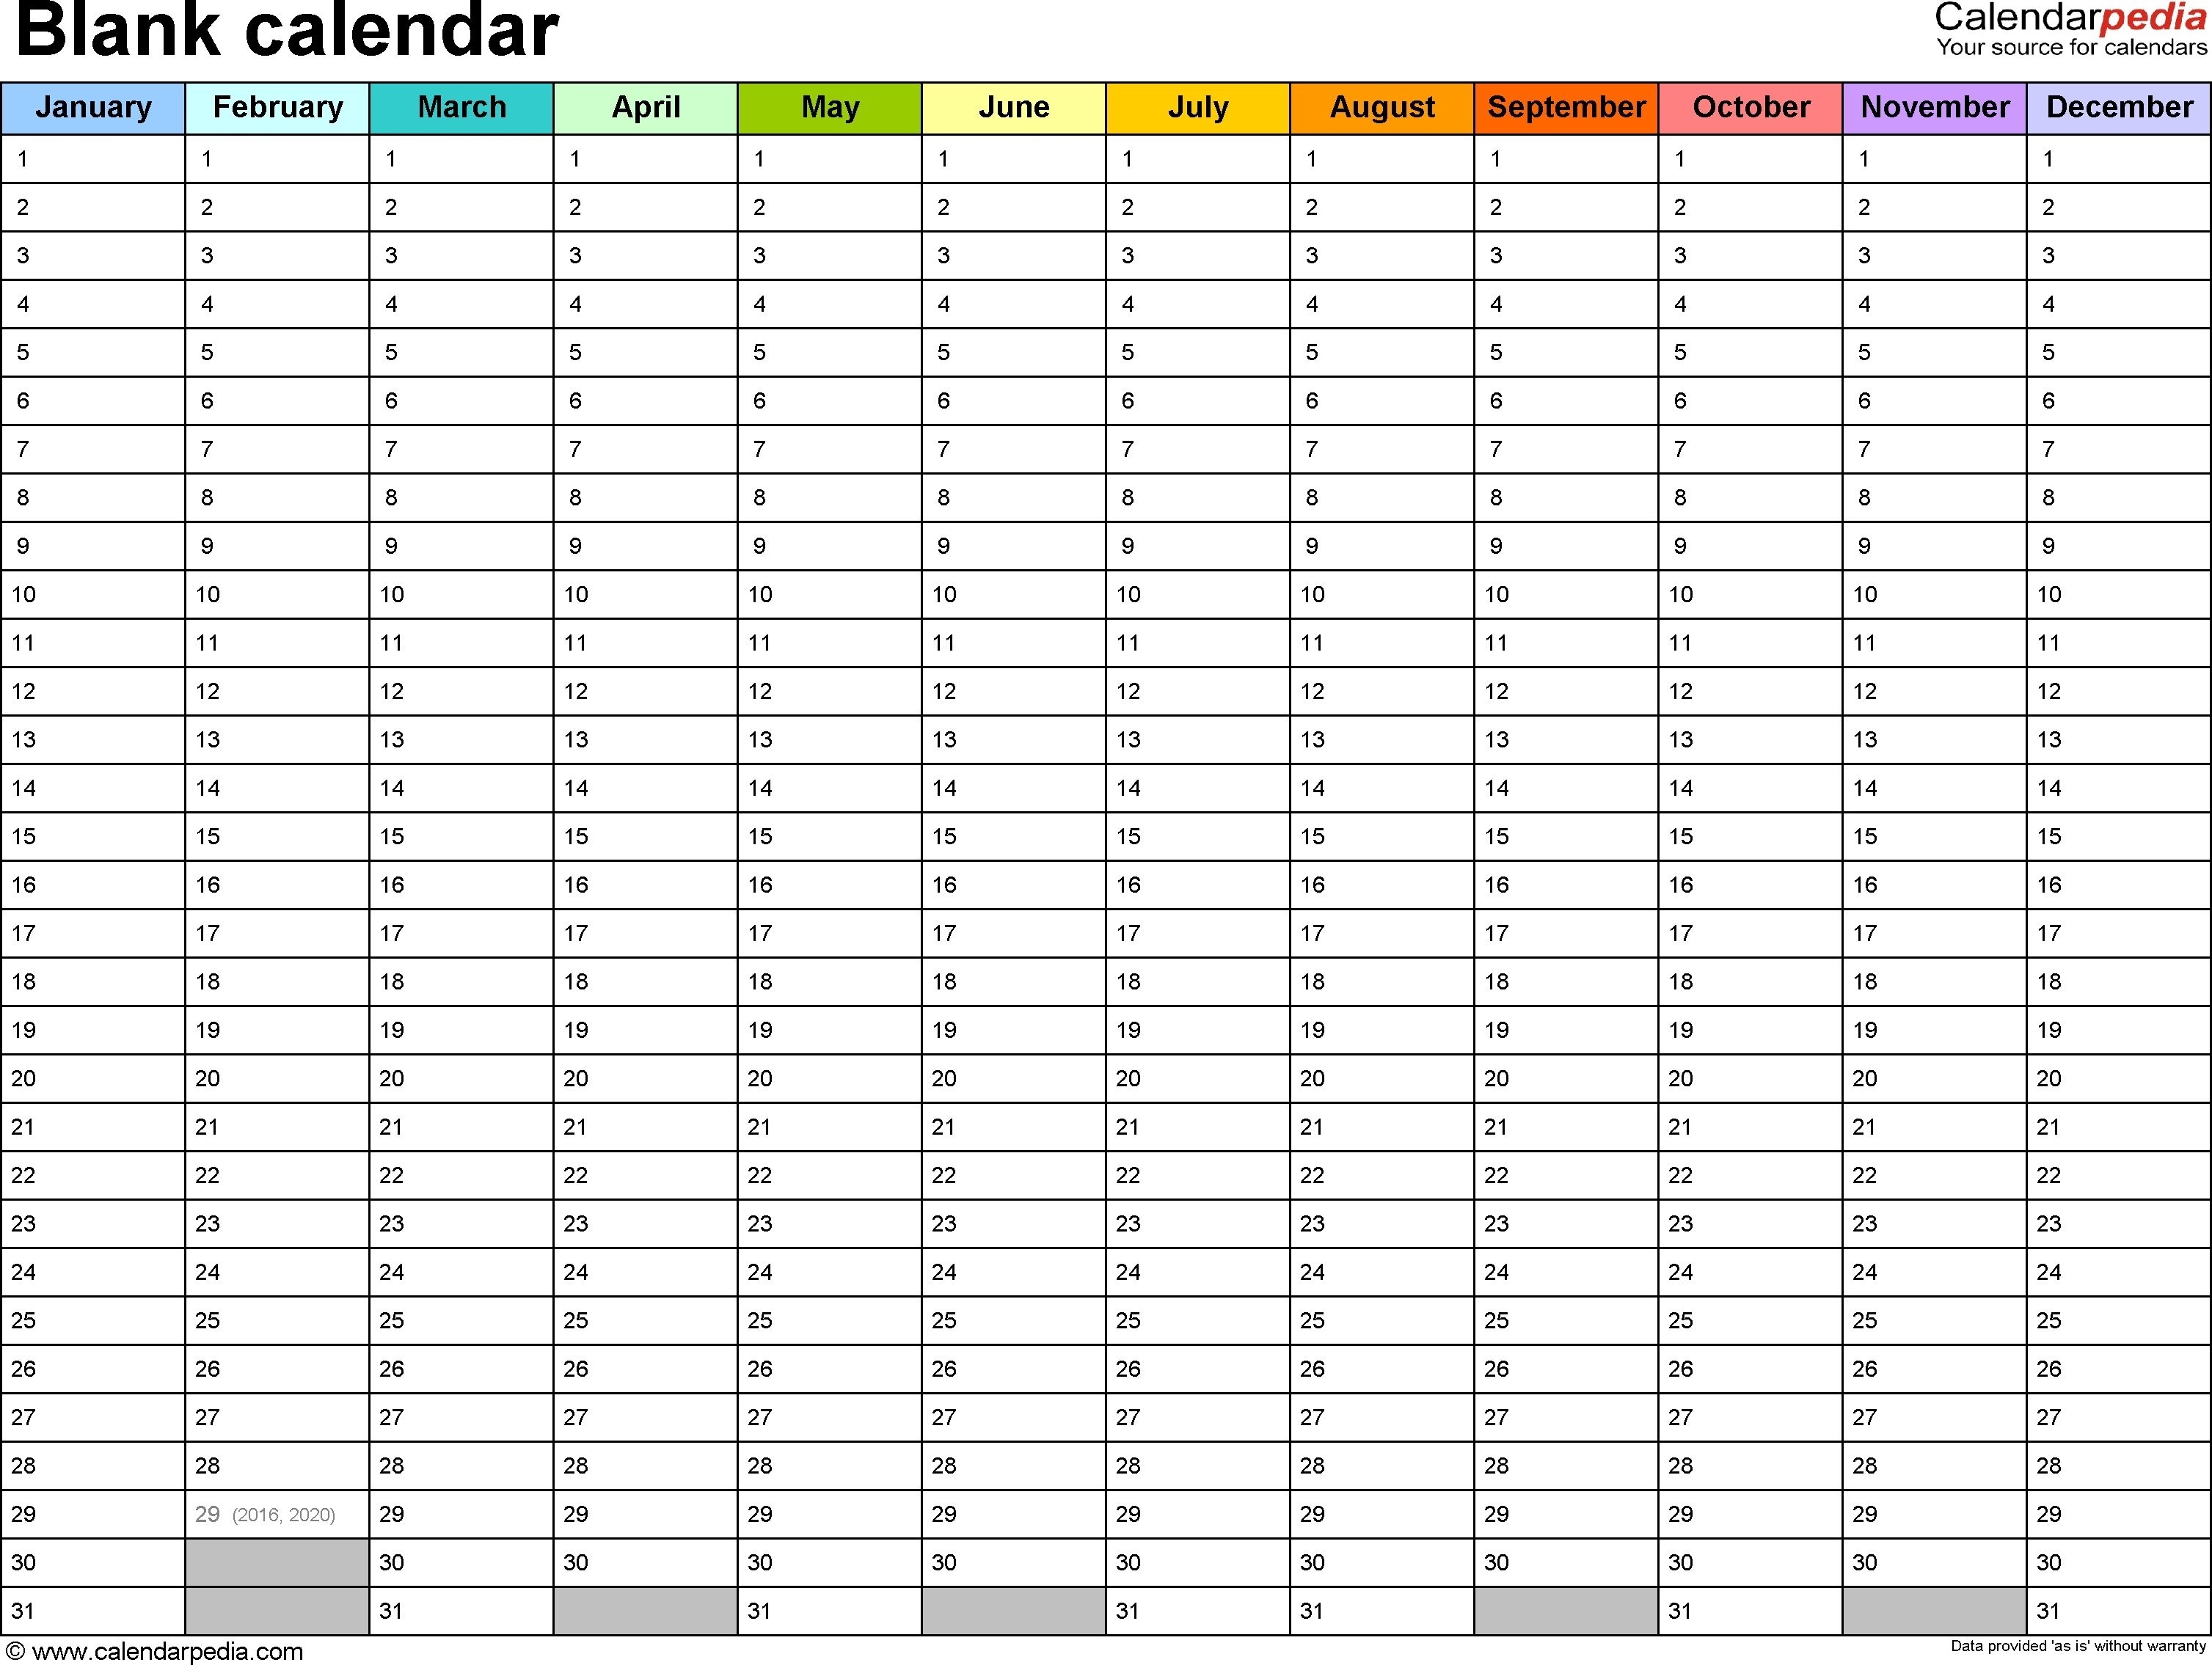 Blank Calendar - 9 Free Printable Microsoft Word Templates Calendar Template Microsoft Word